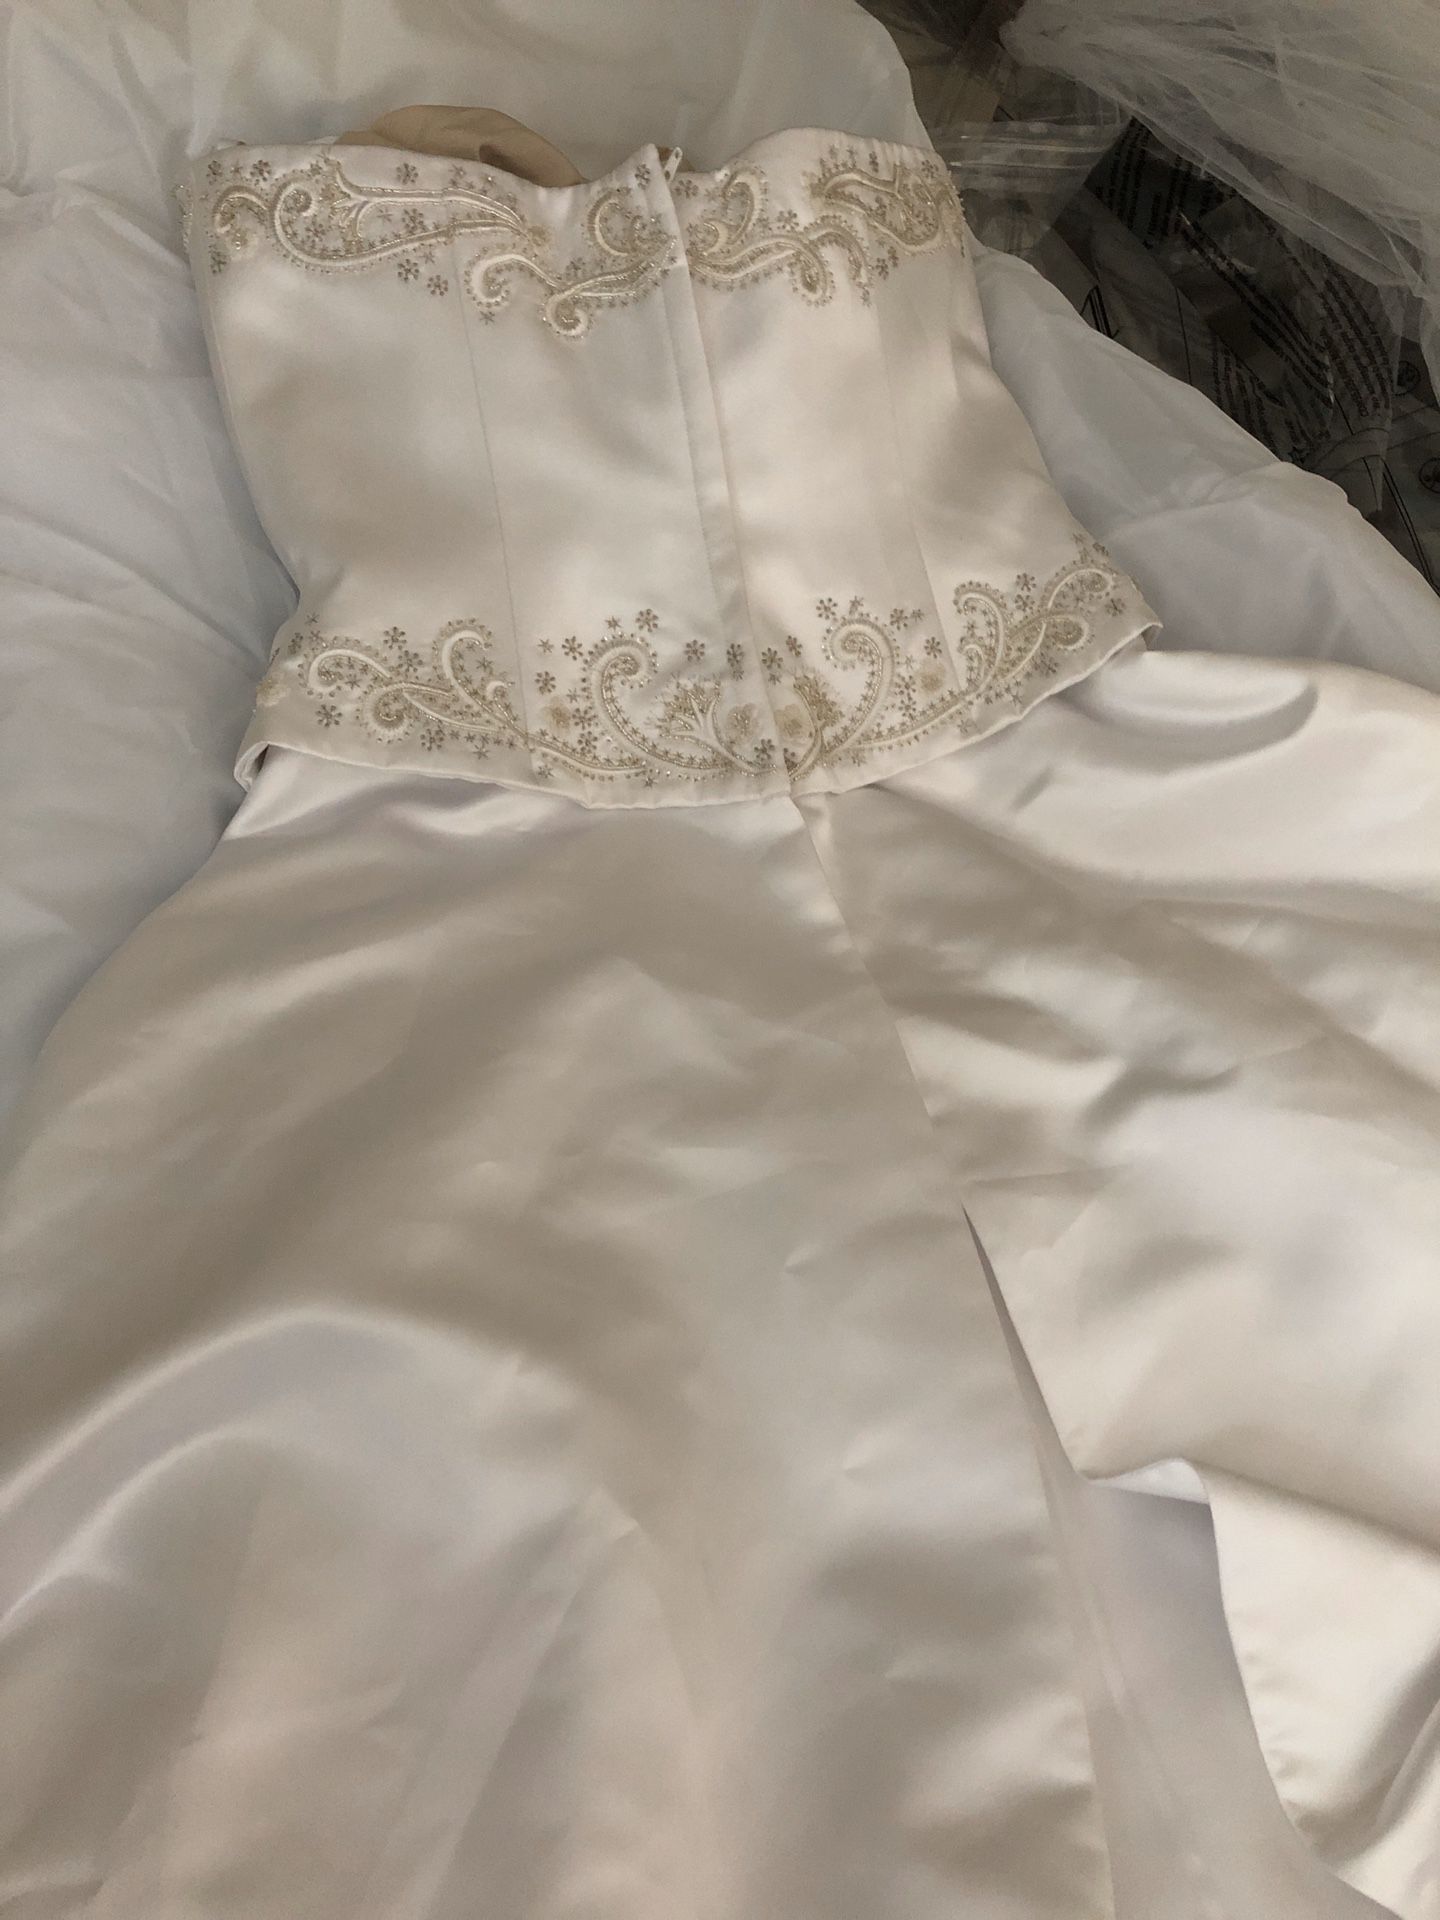 New wedding dress size 14 - never worn $100